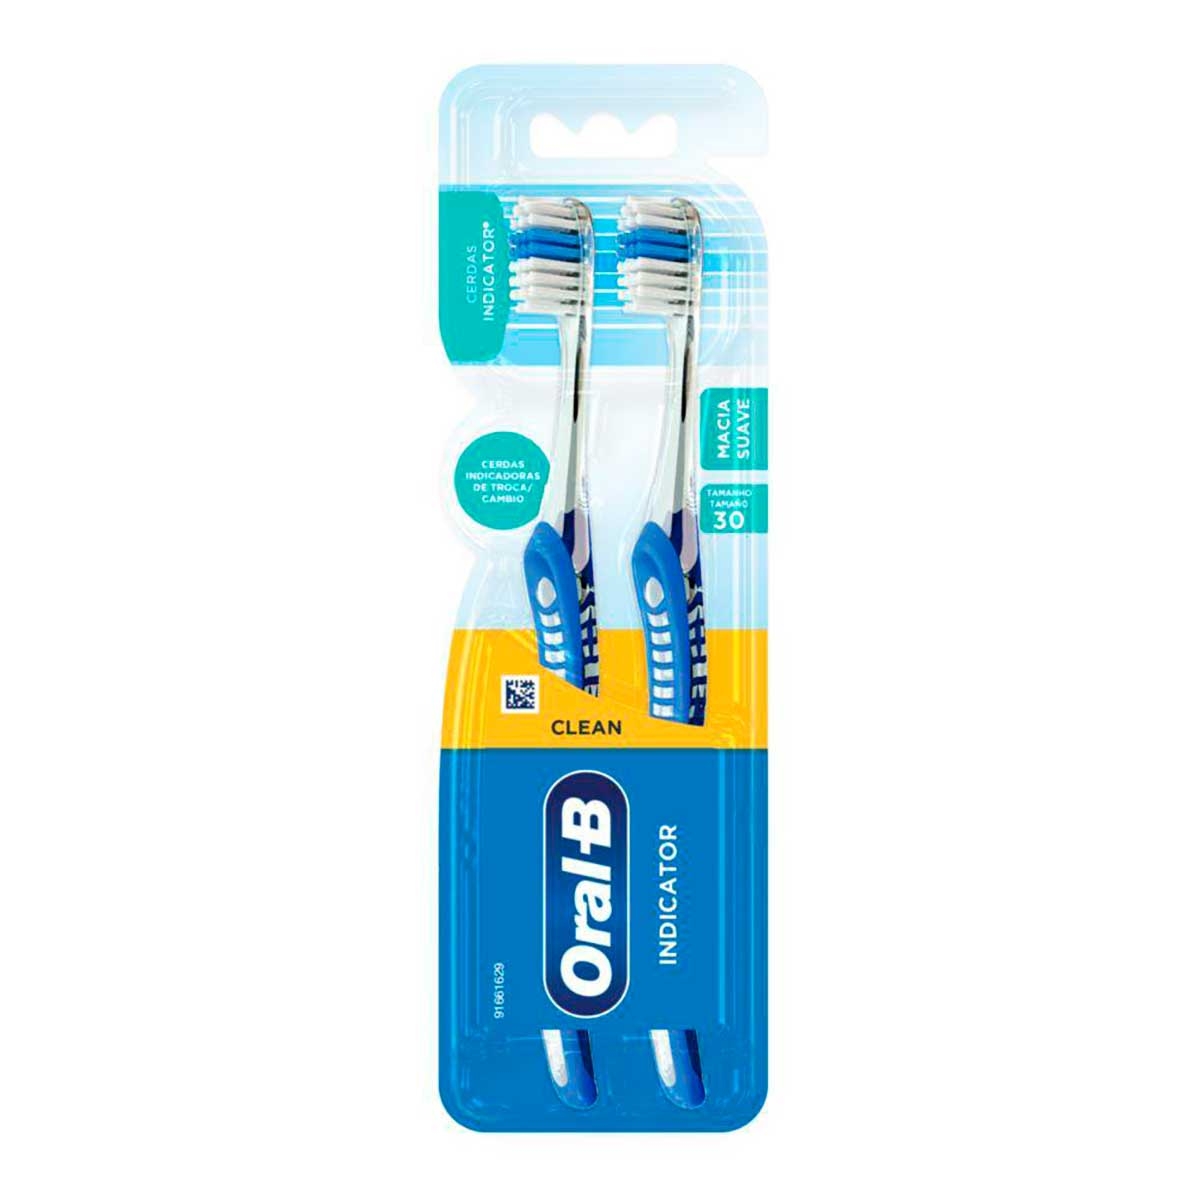 Escova de Dente Oral-B Clean Indicator Macia N°30 com 2 unidades